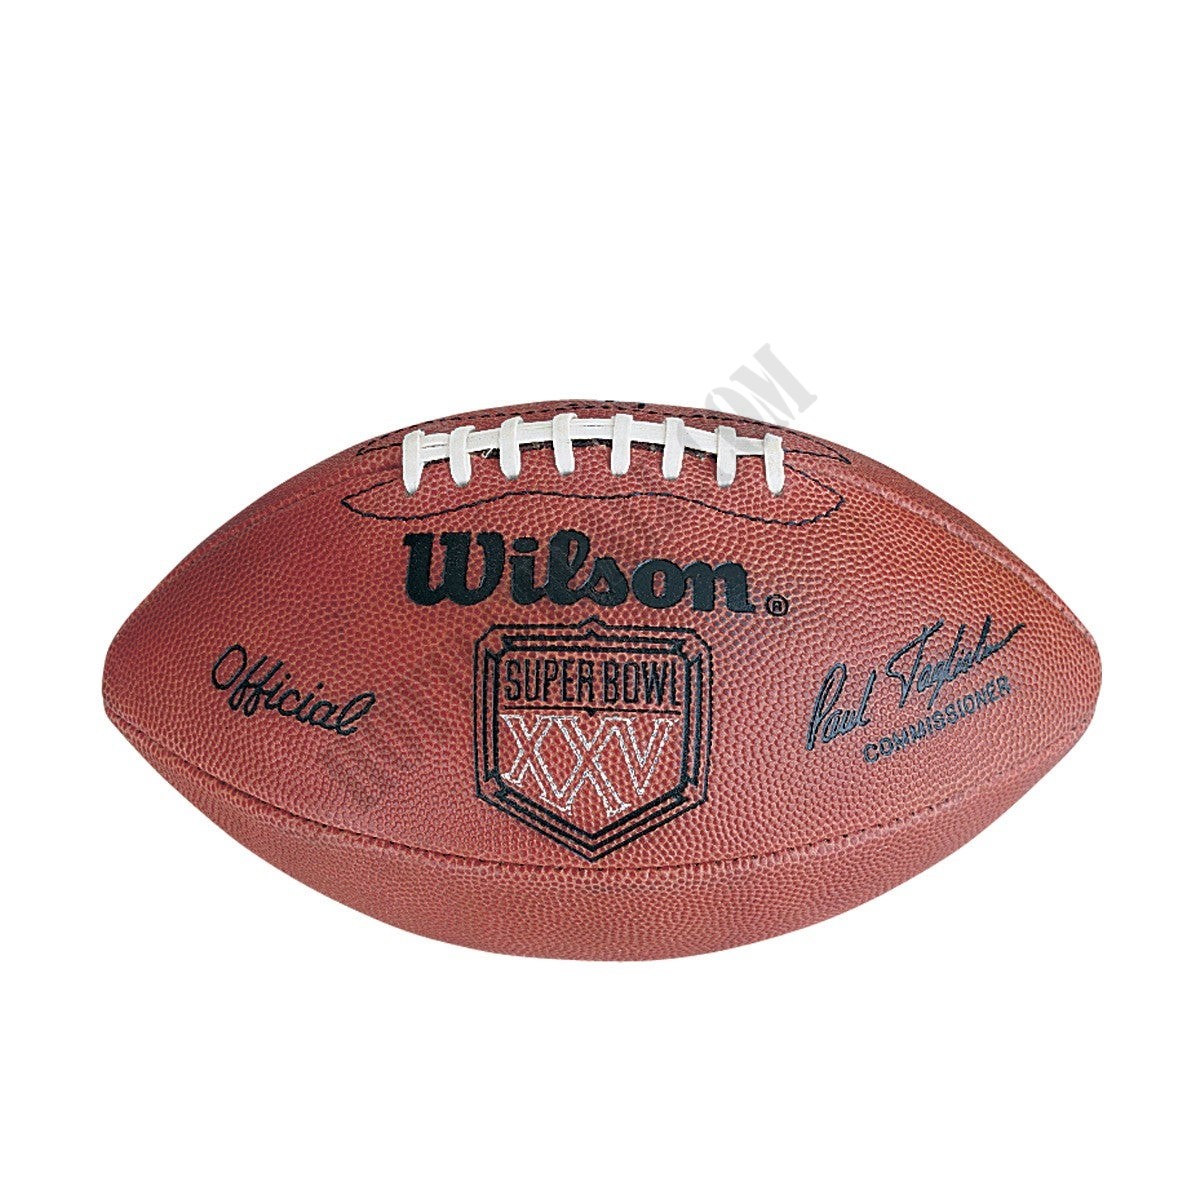 Super Bowl XXV Game Football - New York Giants ● Wilson Promotions - Super Bowl XXV Game Football - New York Giants ● Wilson Promotions